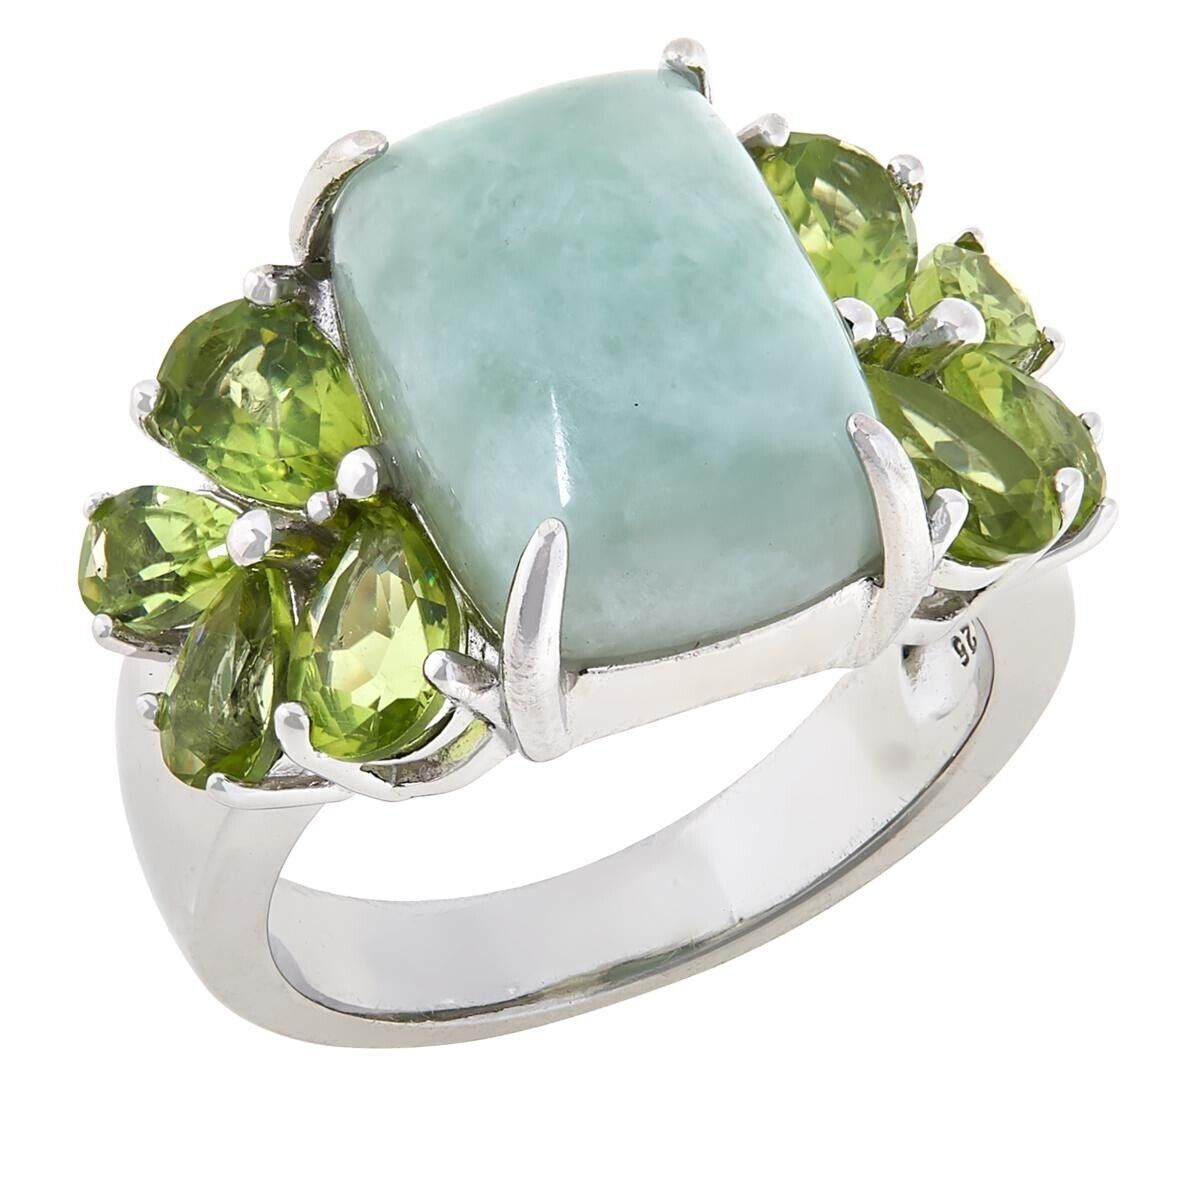 Jade of Yesteryear Sterling Silver CushionCut Jade & Peridot Ring. Size 7